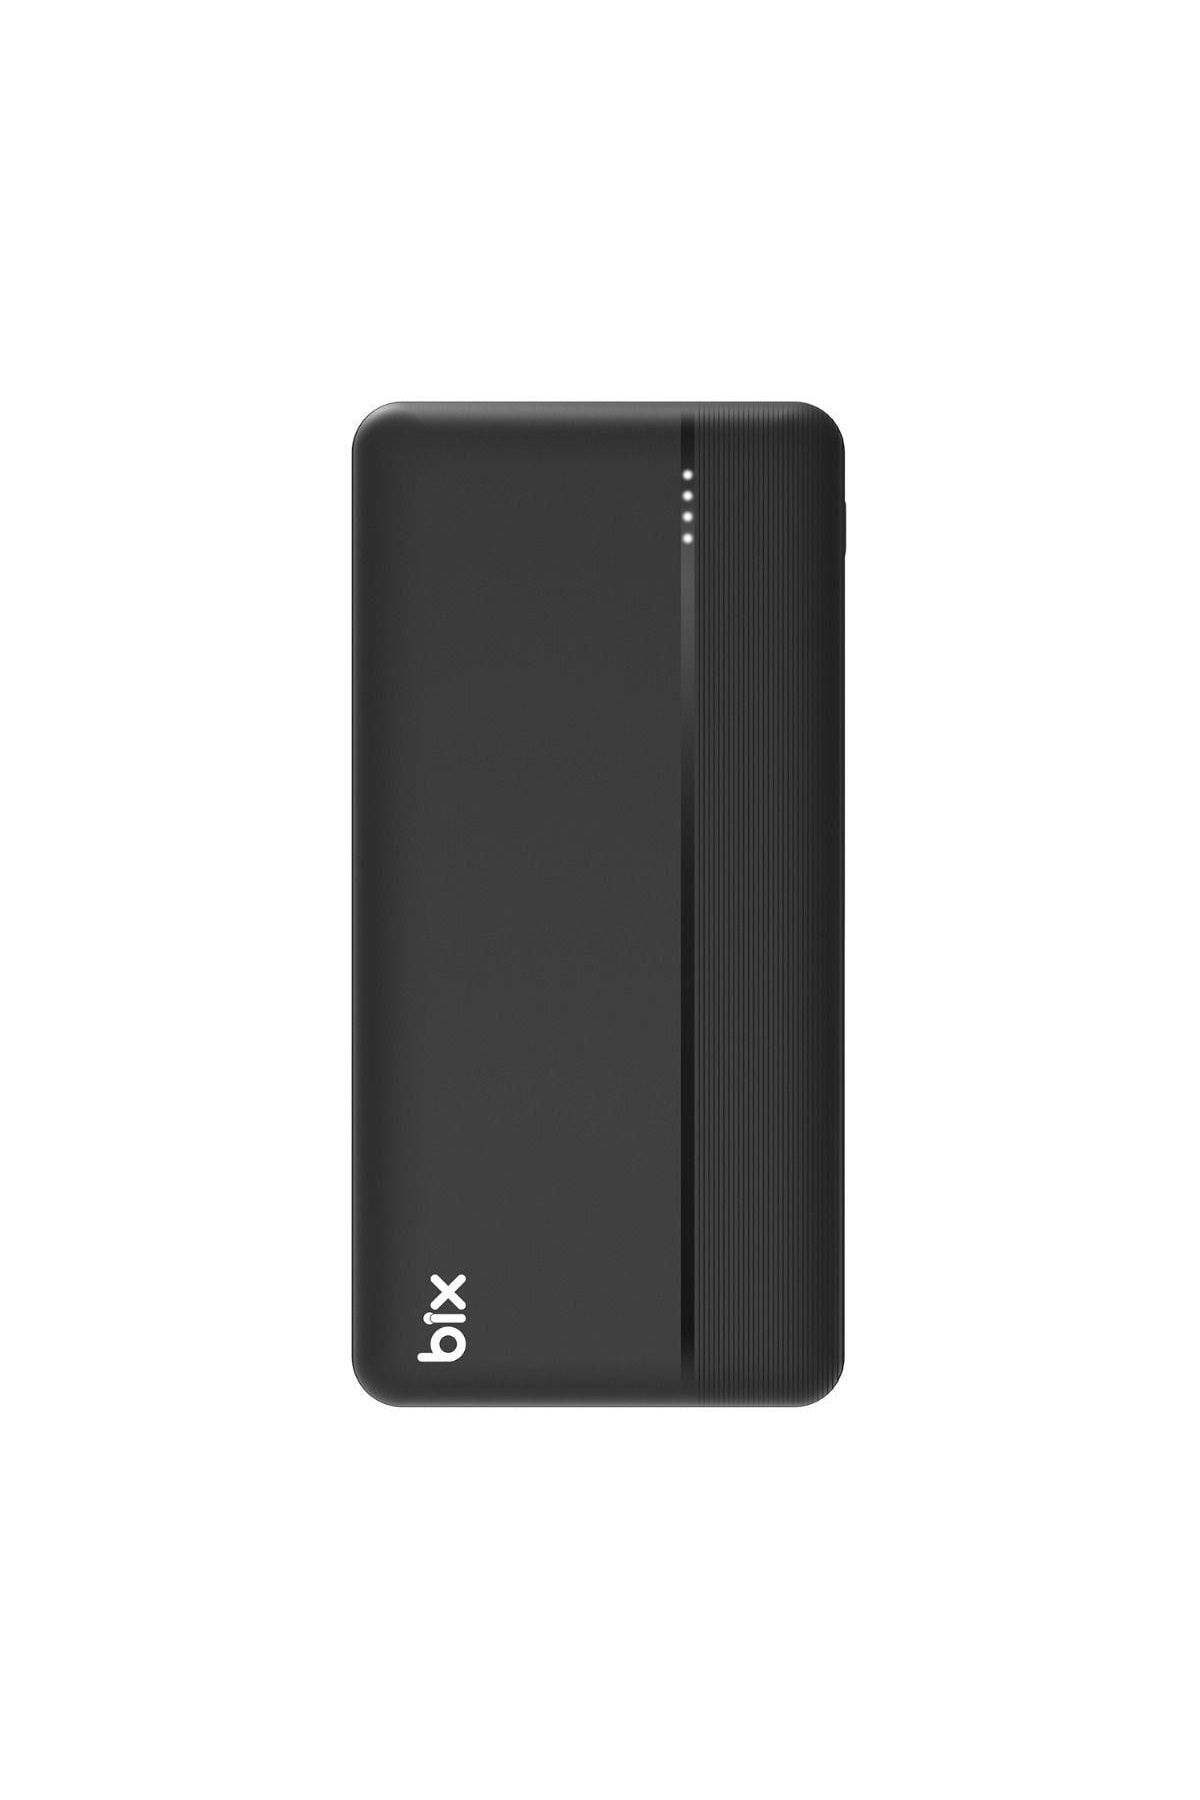 Bix Pb302 Dört Çıkışlı Qc 4.0 Pd 30000 Mah Powerbank Siyah